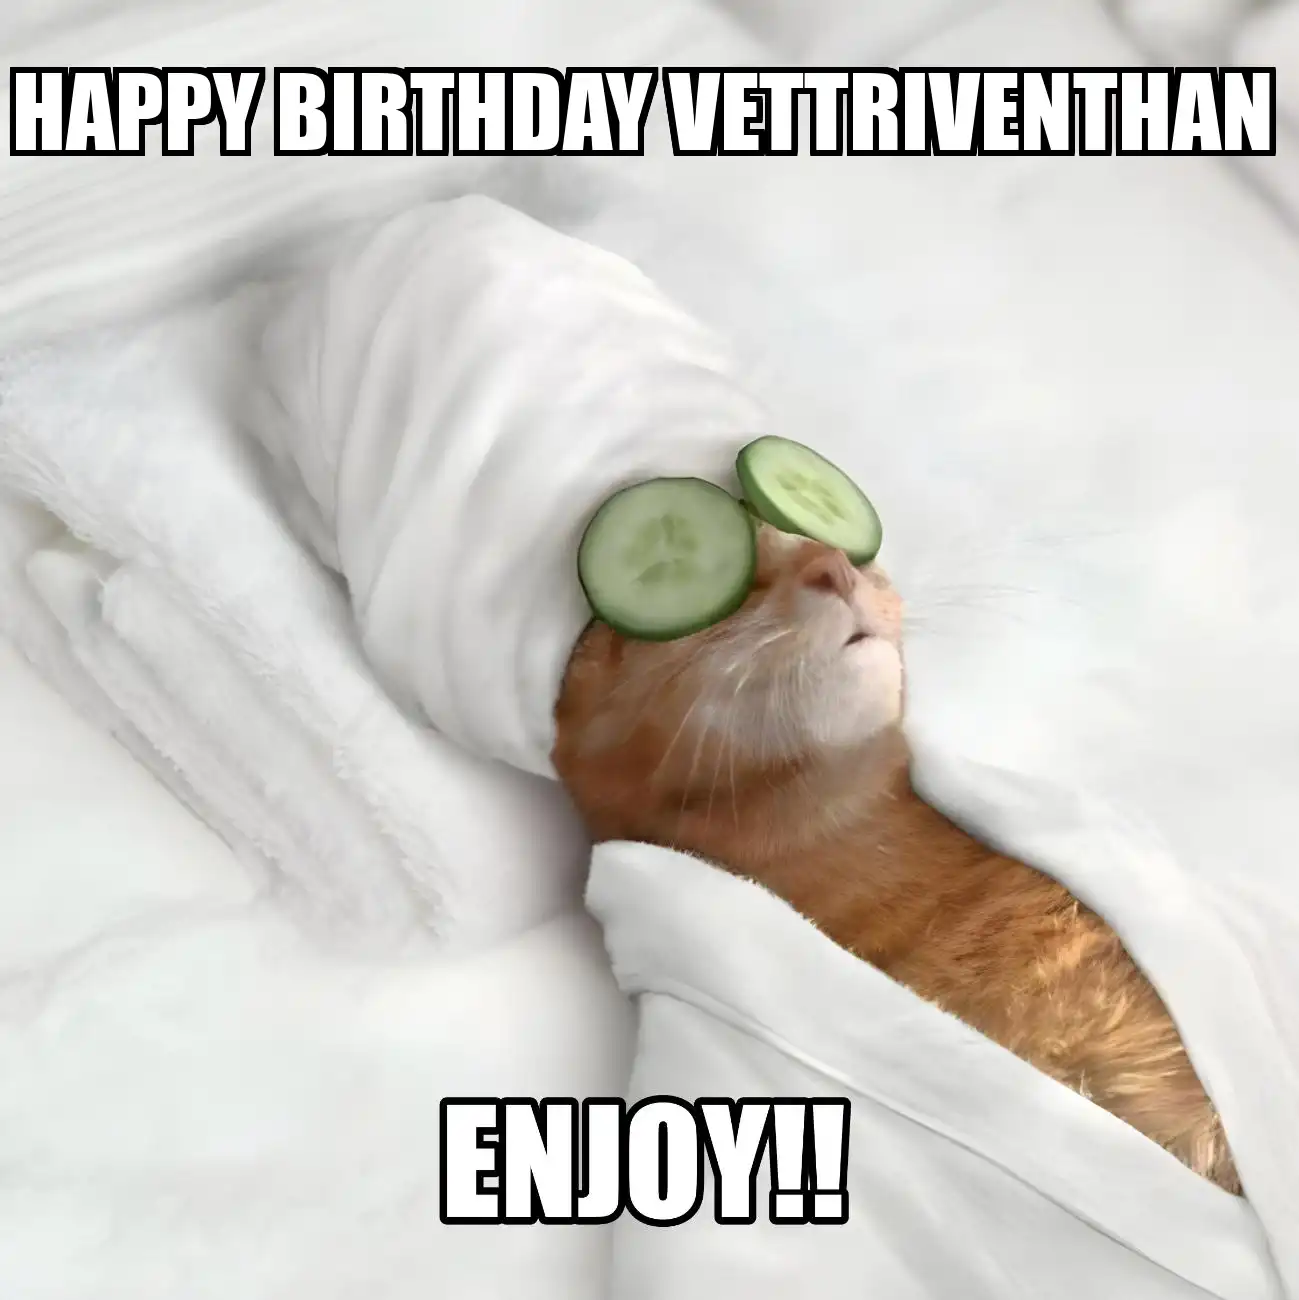 Happy Birthday Vettriventhan Enjoy Cat Meme